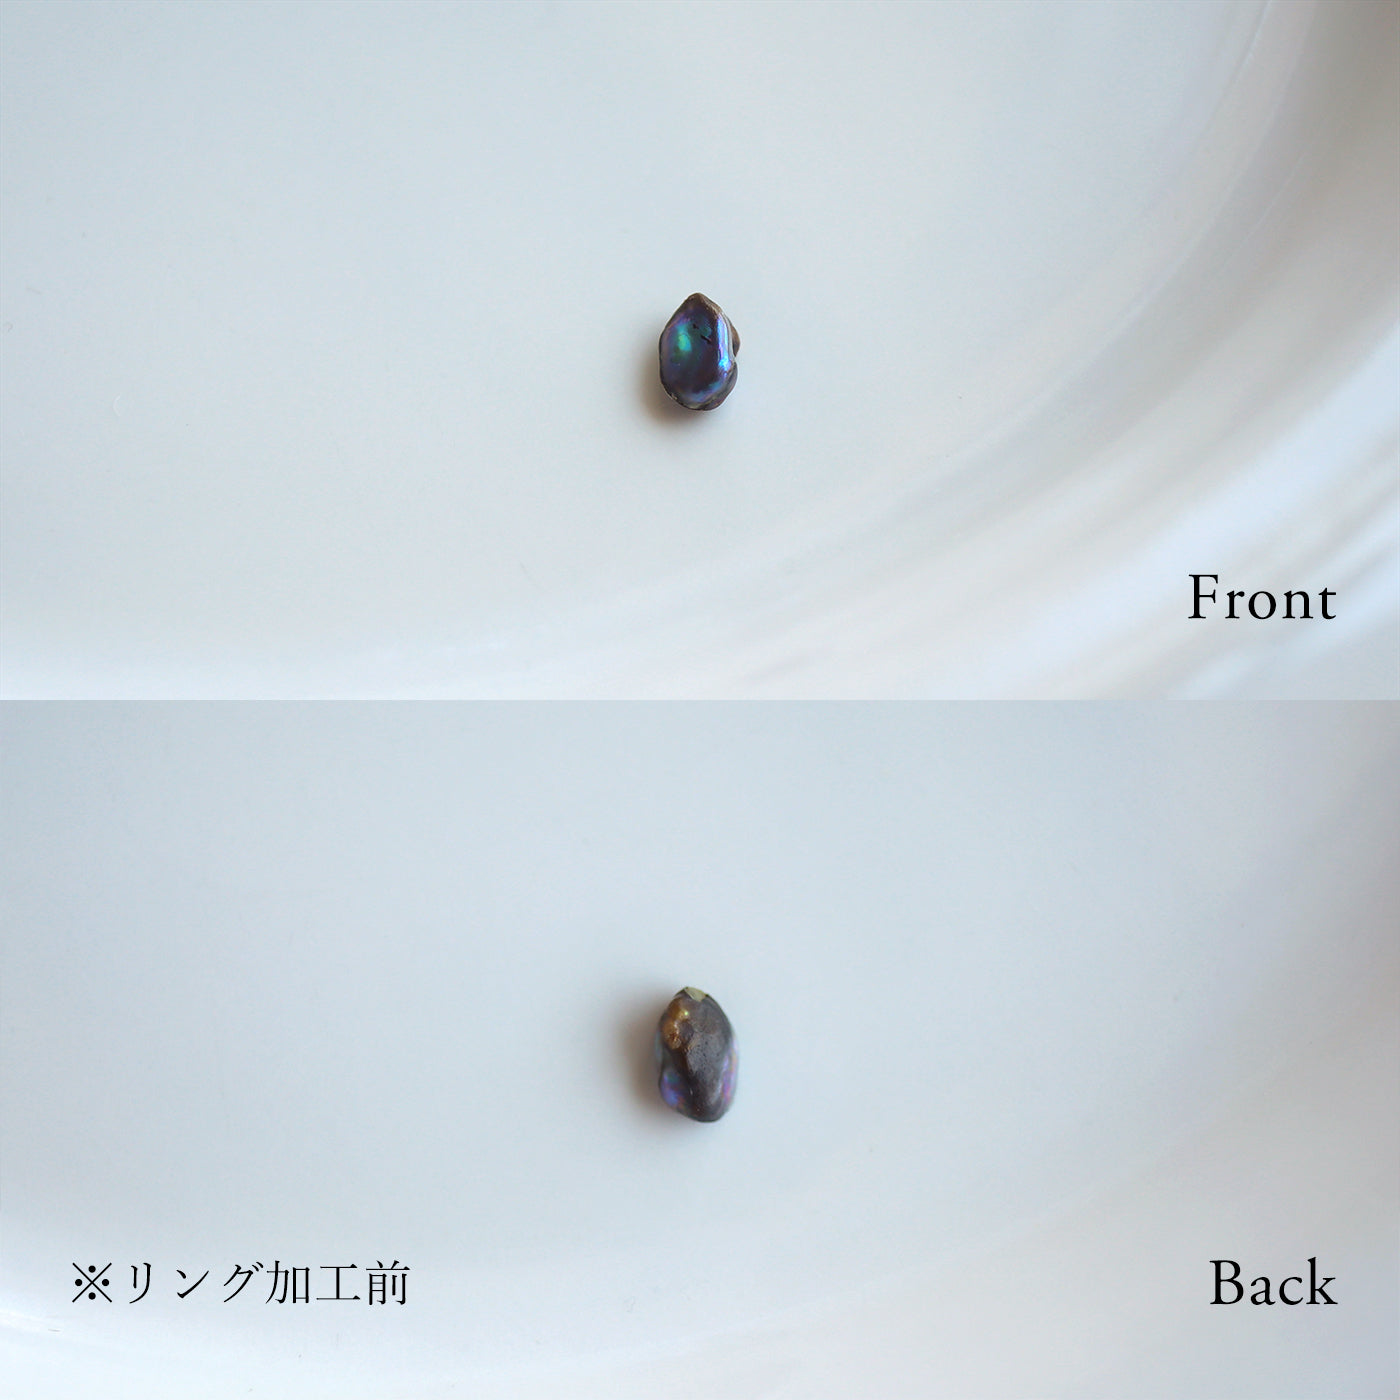 Shizumu Pearl Ring - 2.5-3.0mm Baby Akoya